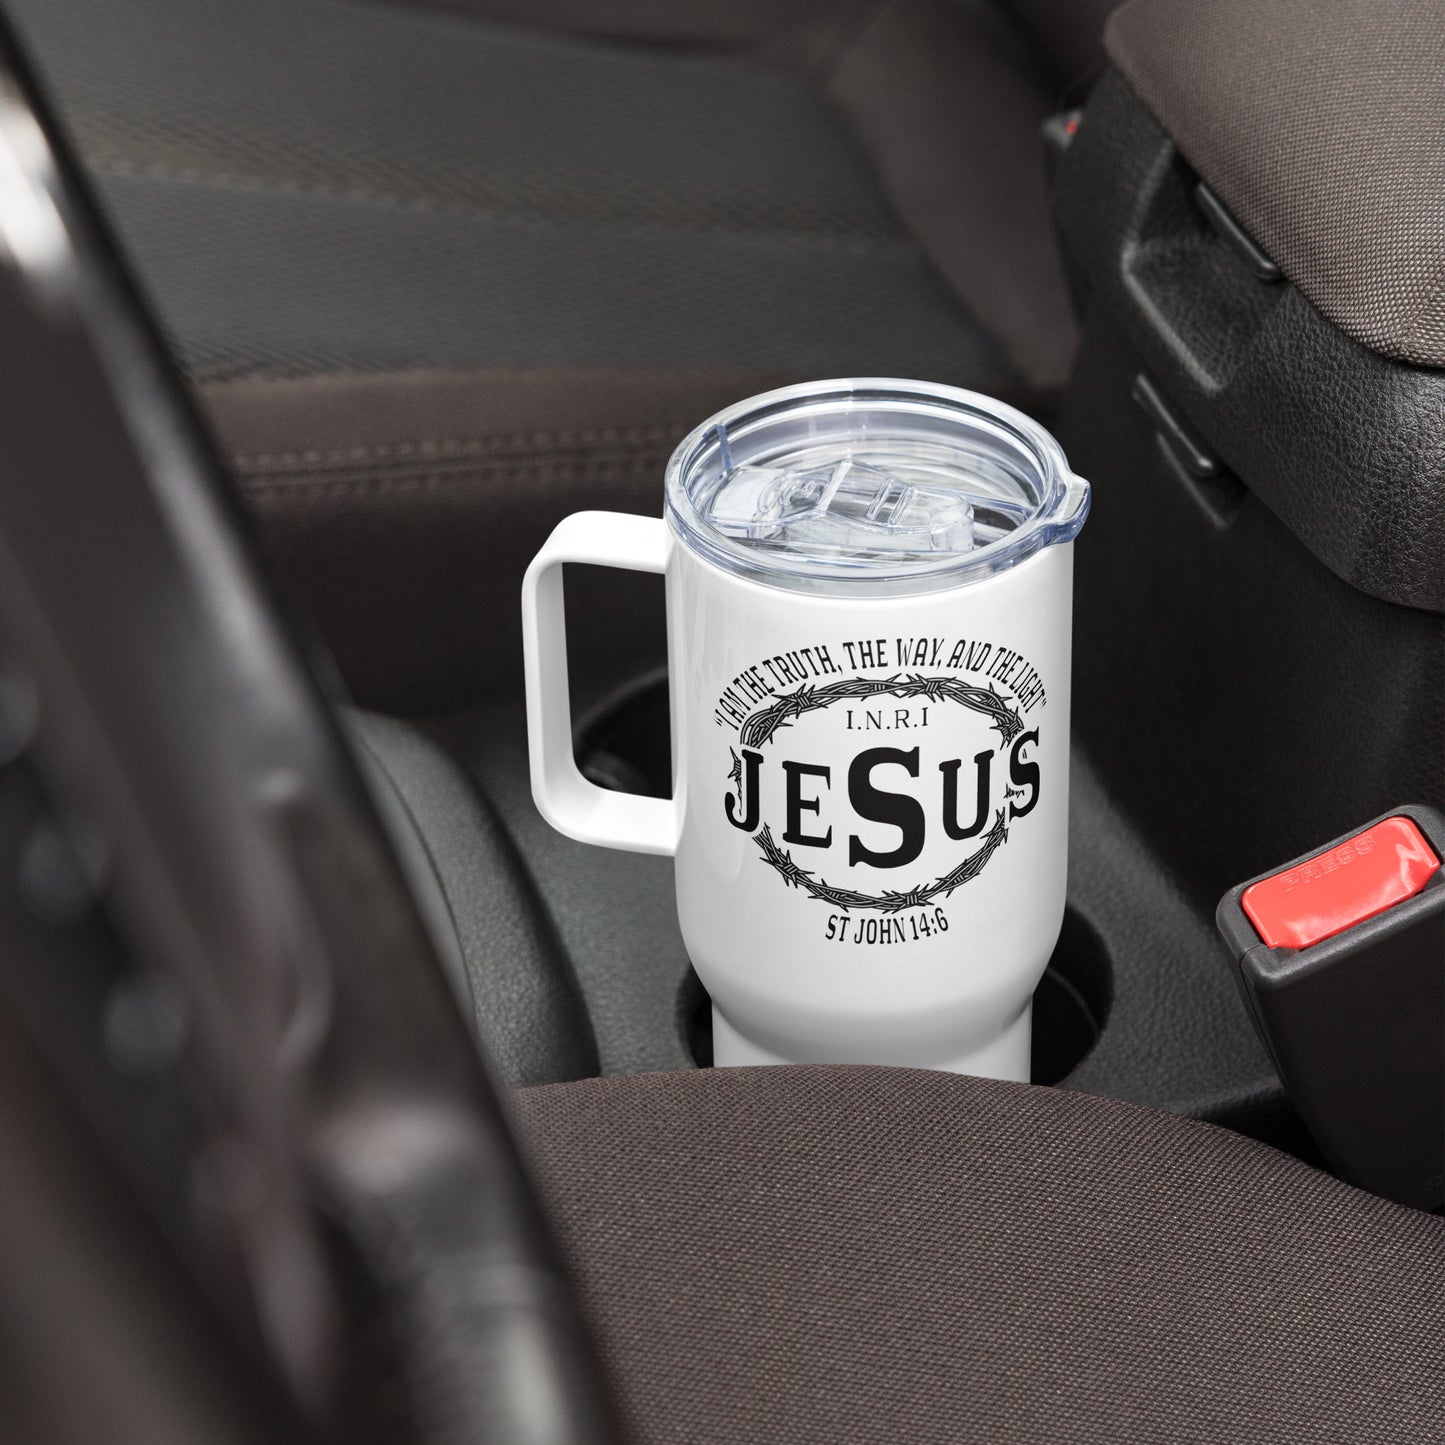 Jesus the Way John 14:6 Travel mug with a handle